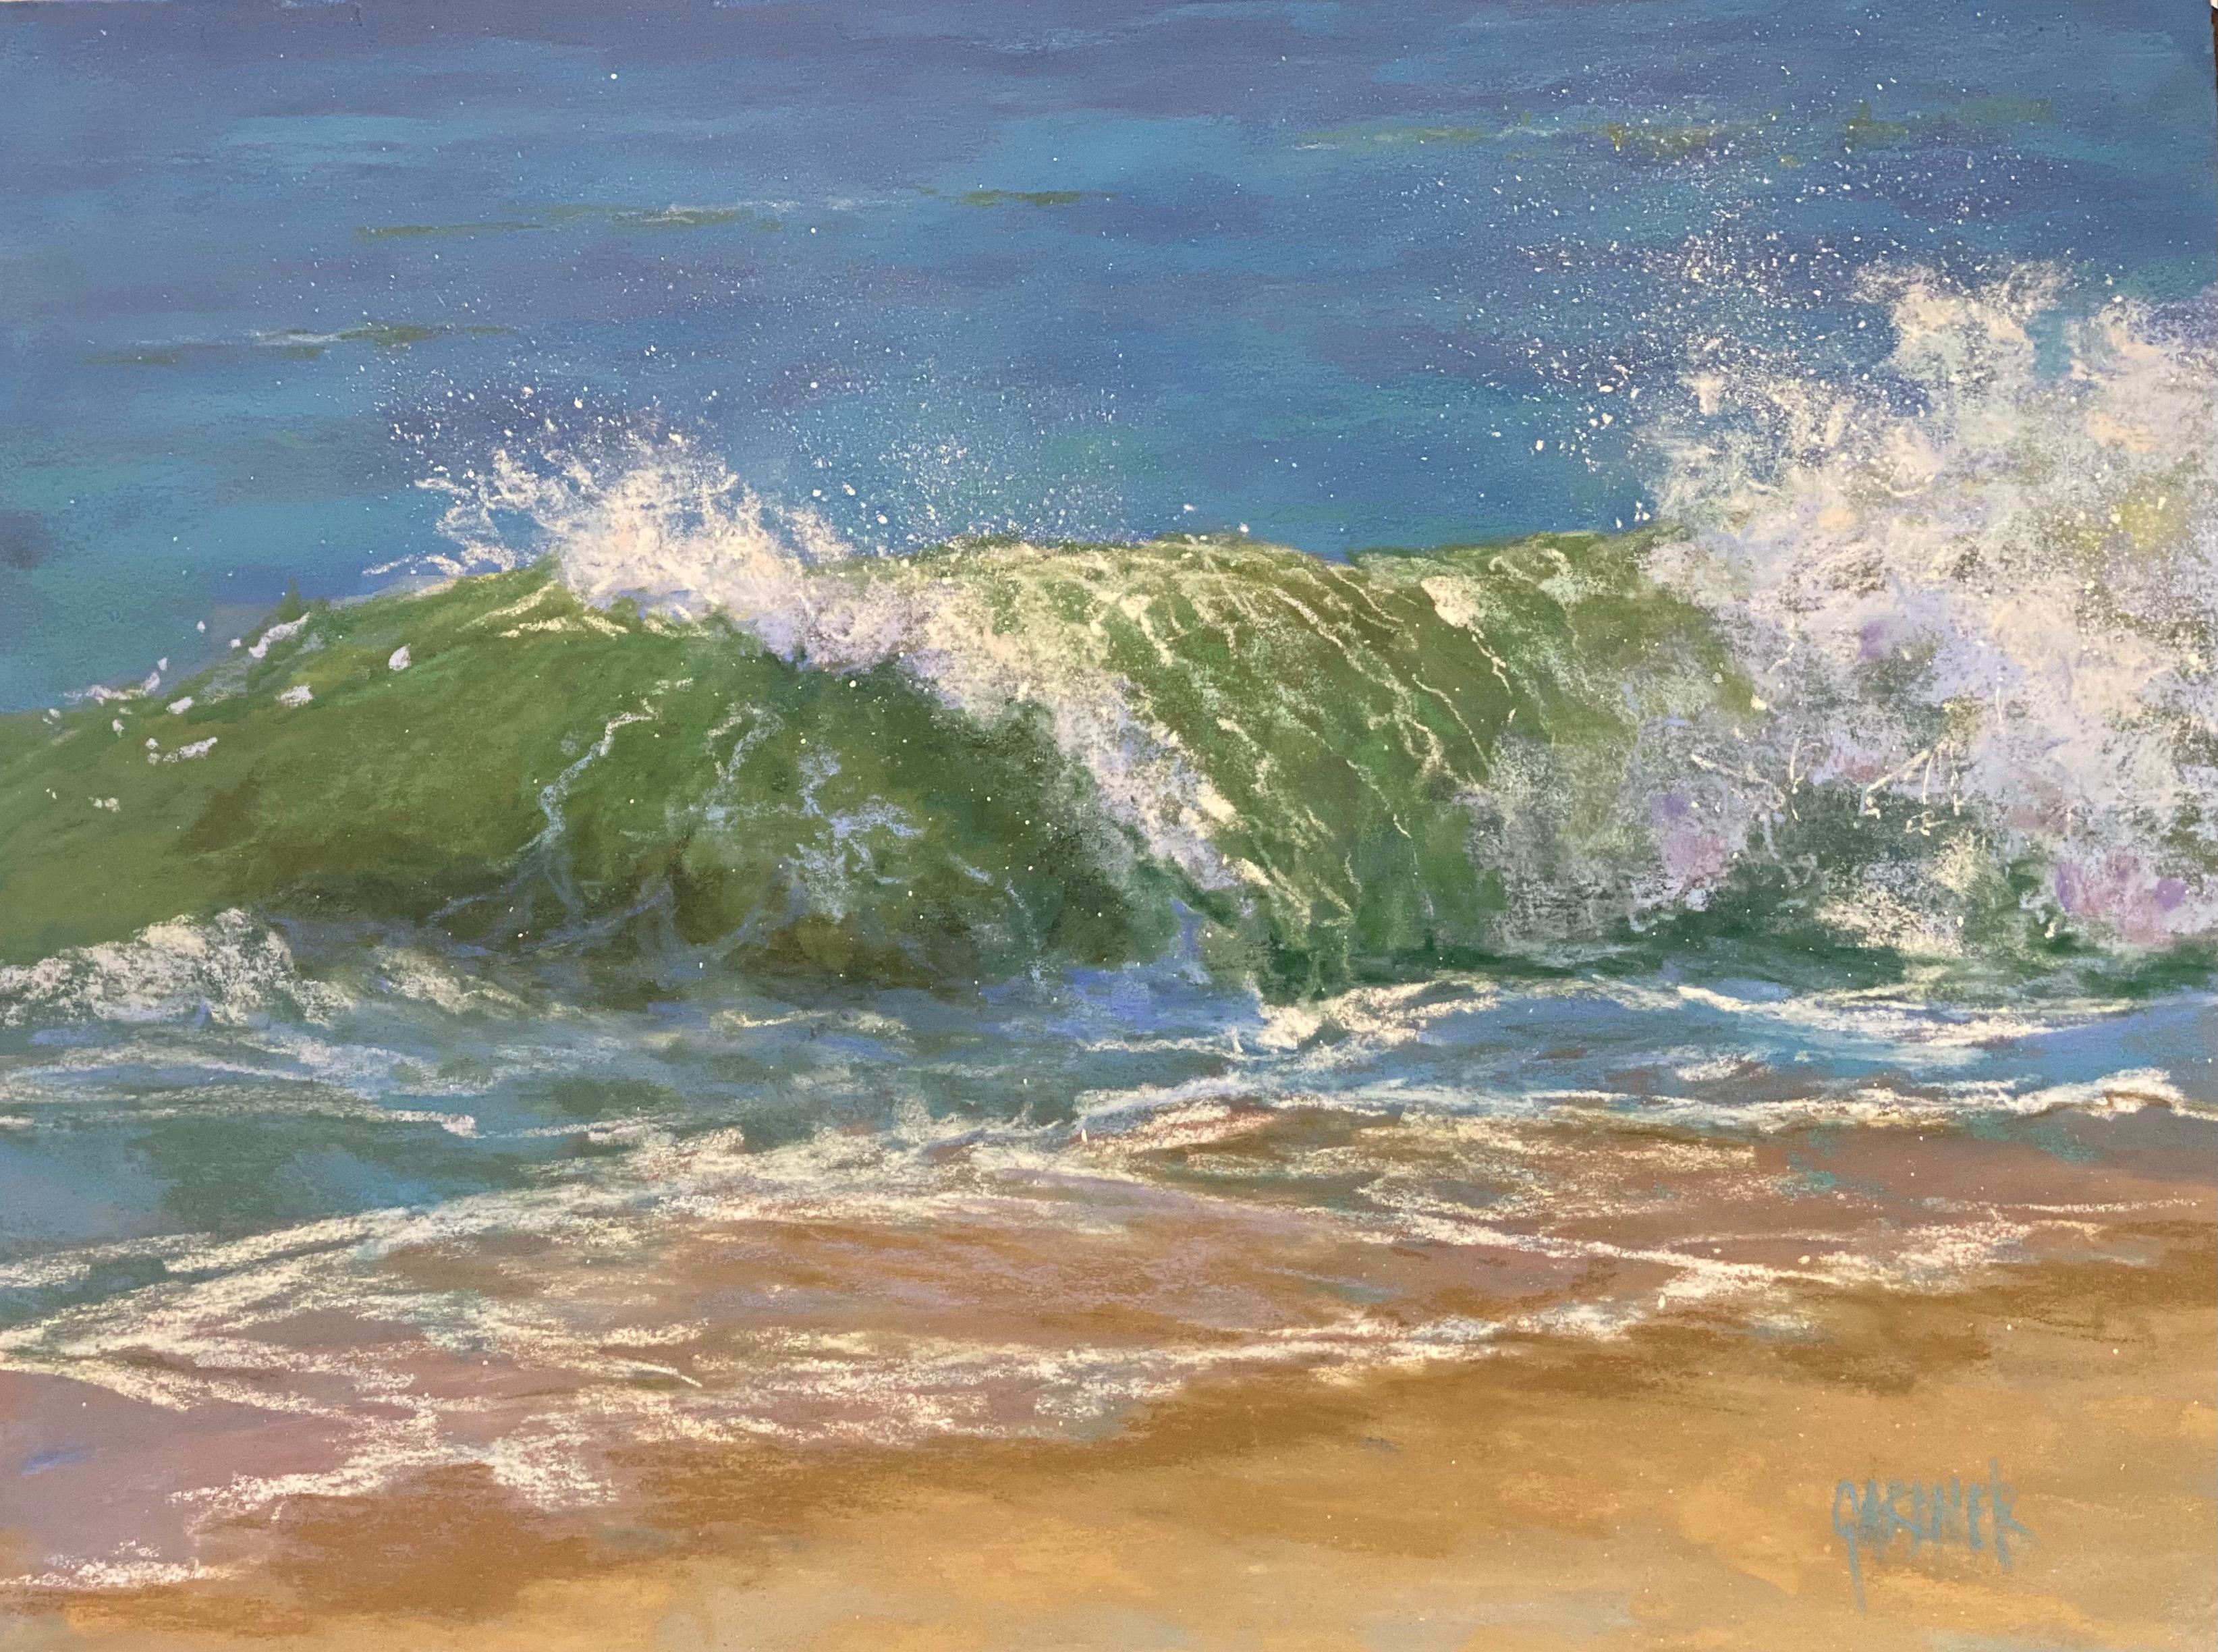 Dina Gardner Landscape Painting - September Seas, Original Seascape Painting in Pastel on Board, 2021